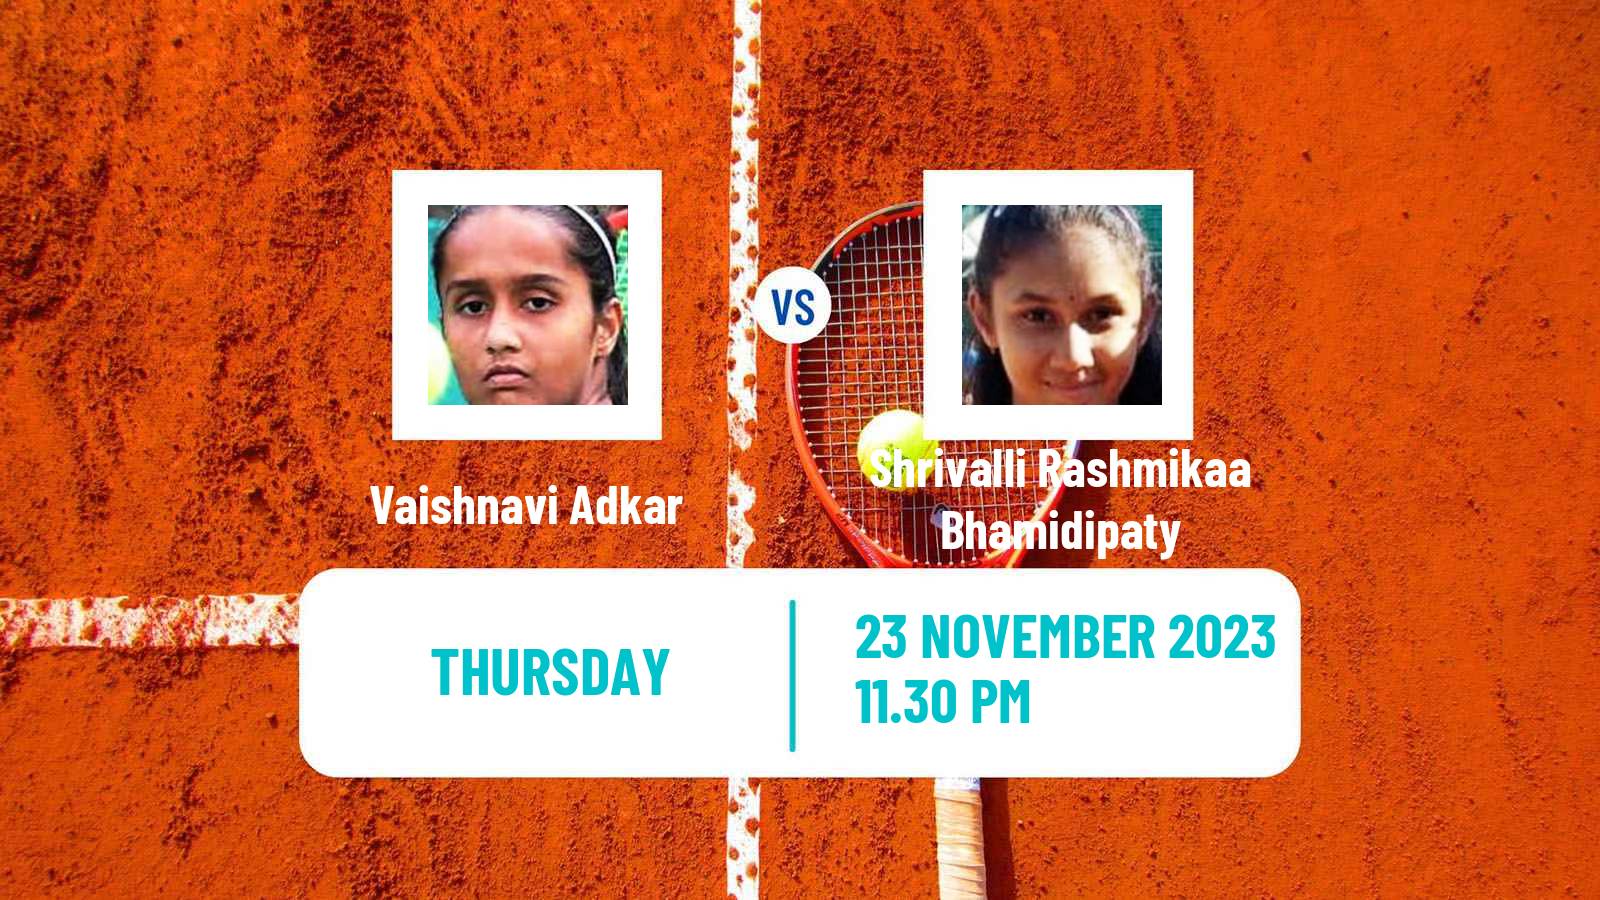 Tennis ITF W25 Bengaluru 2 Women Vaishnavi Adkar - Shrivalli Rashmikaa Bhamidipaty